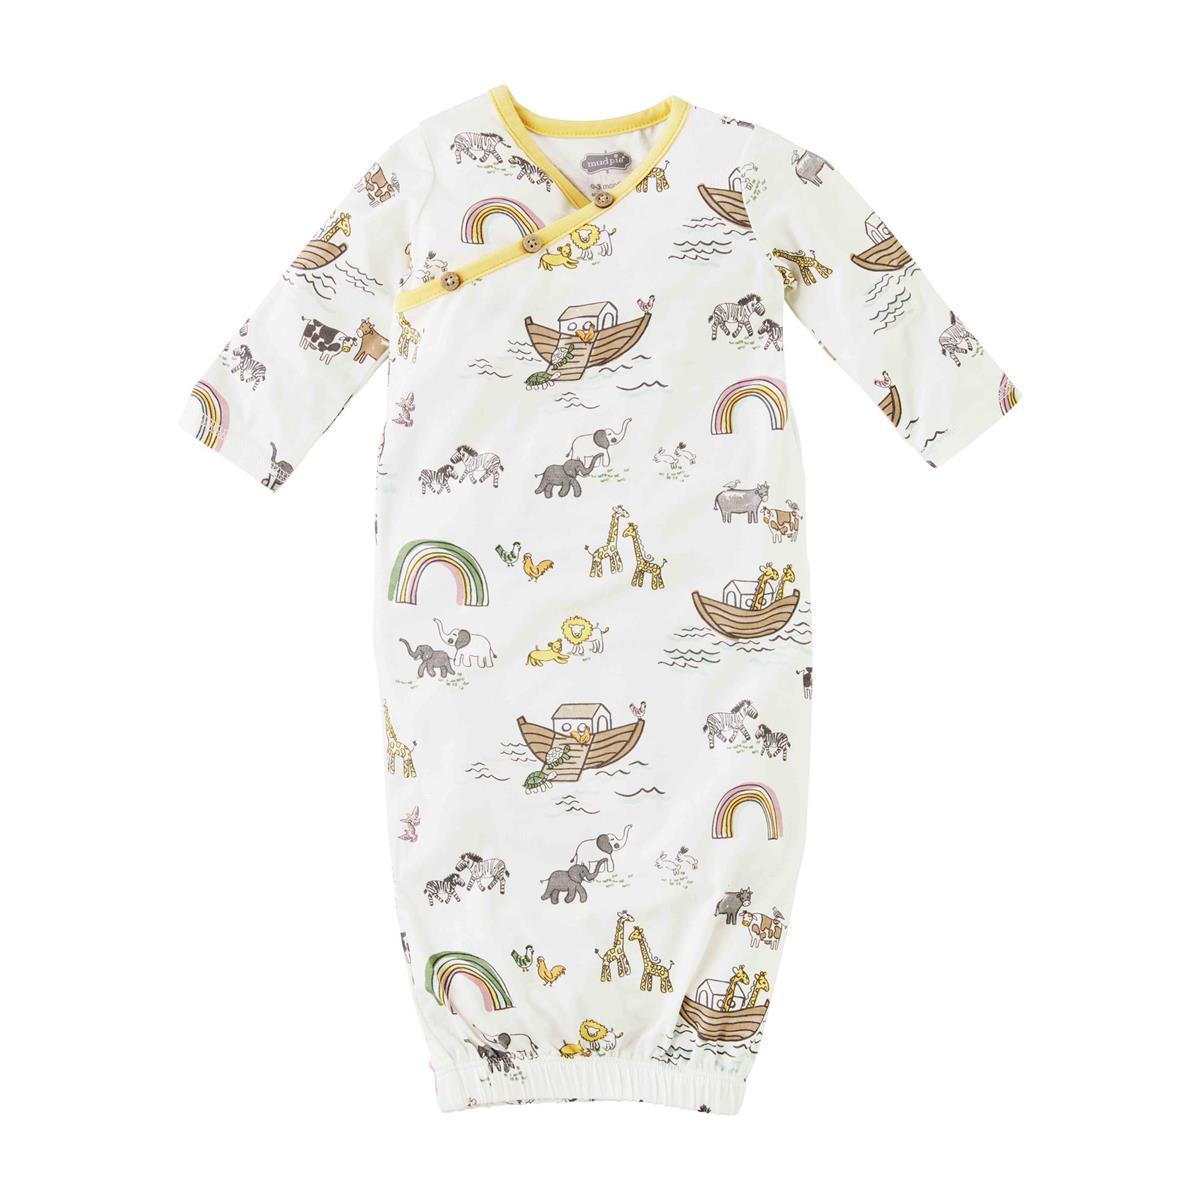 Noah's Ark Infant Sleeper Gown